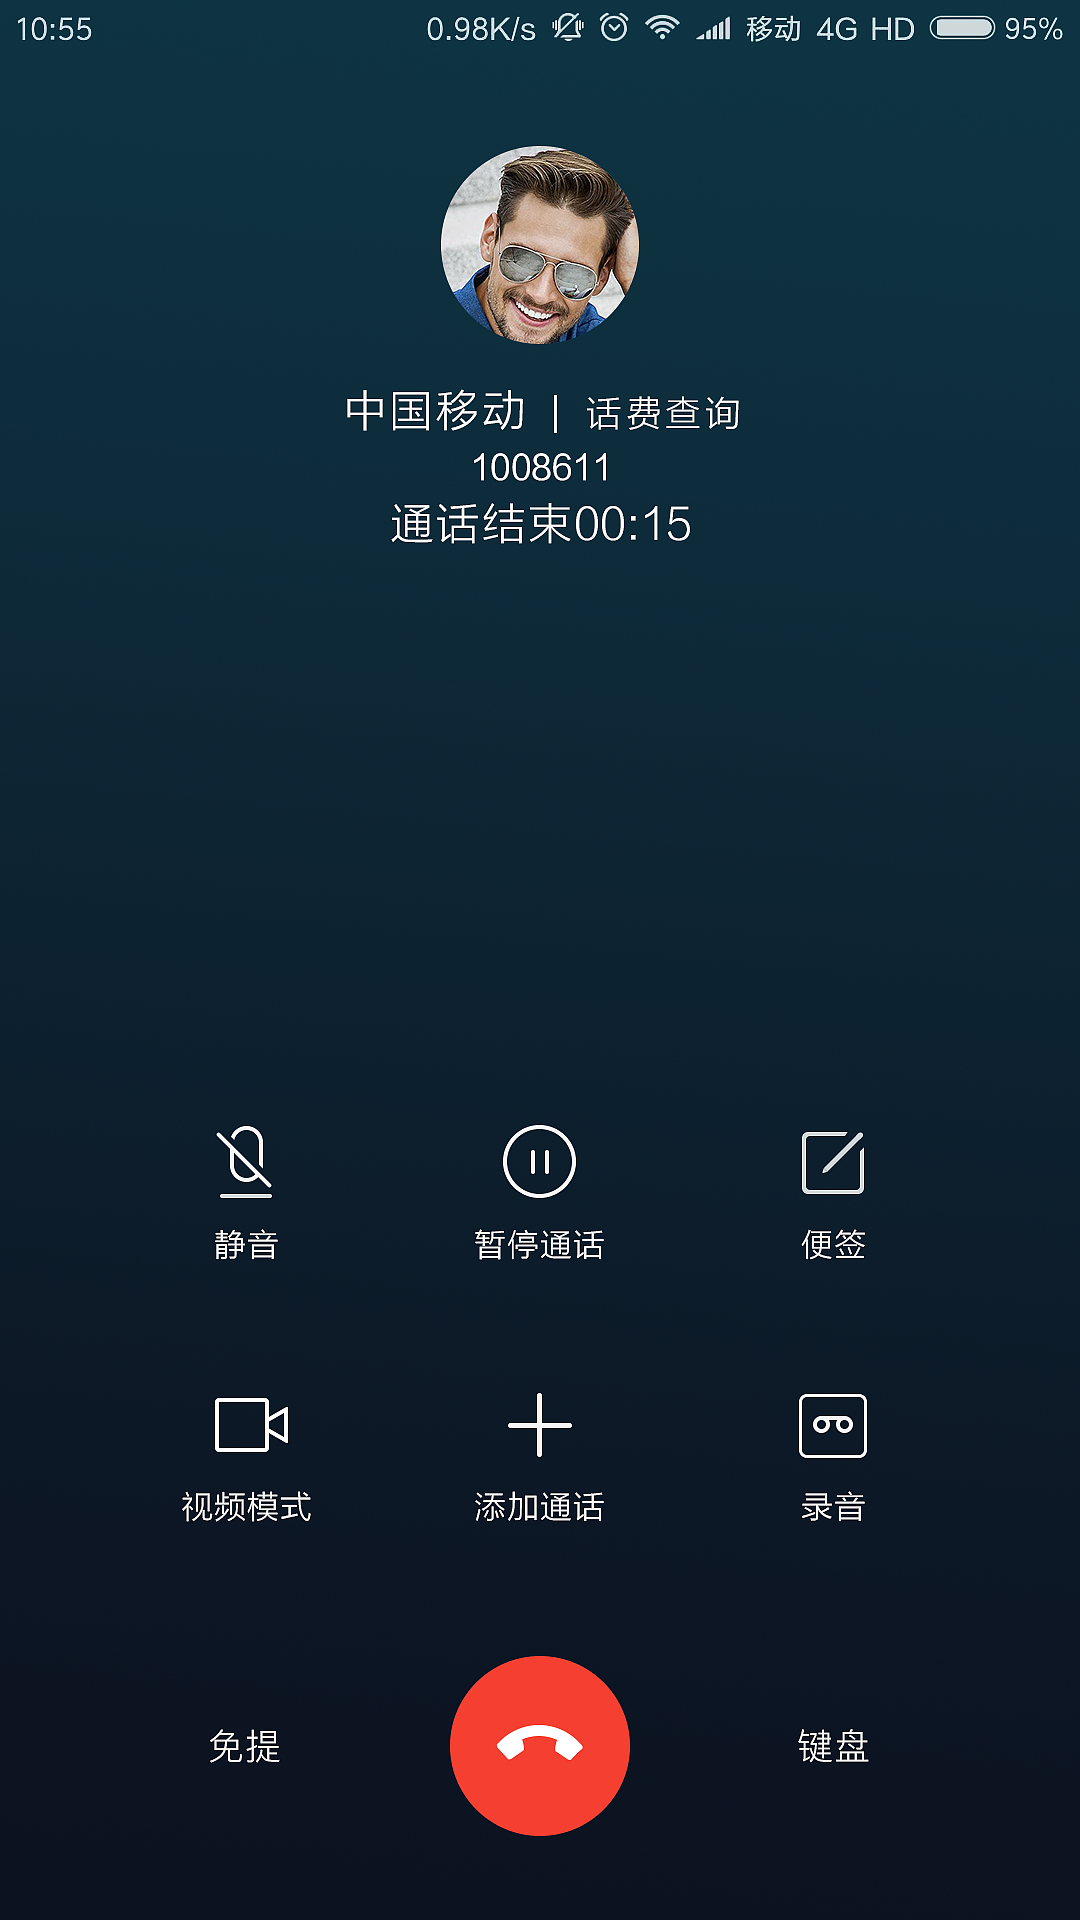 Android微信2013正式版下载-安卓手机微信5.0.3最新版下载微信,老版微信下载,2016微信,wechat